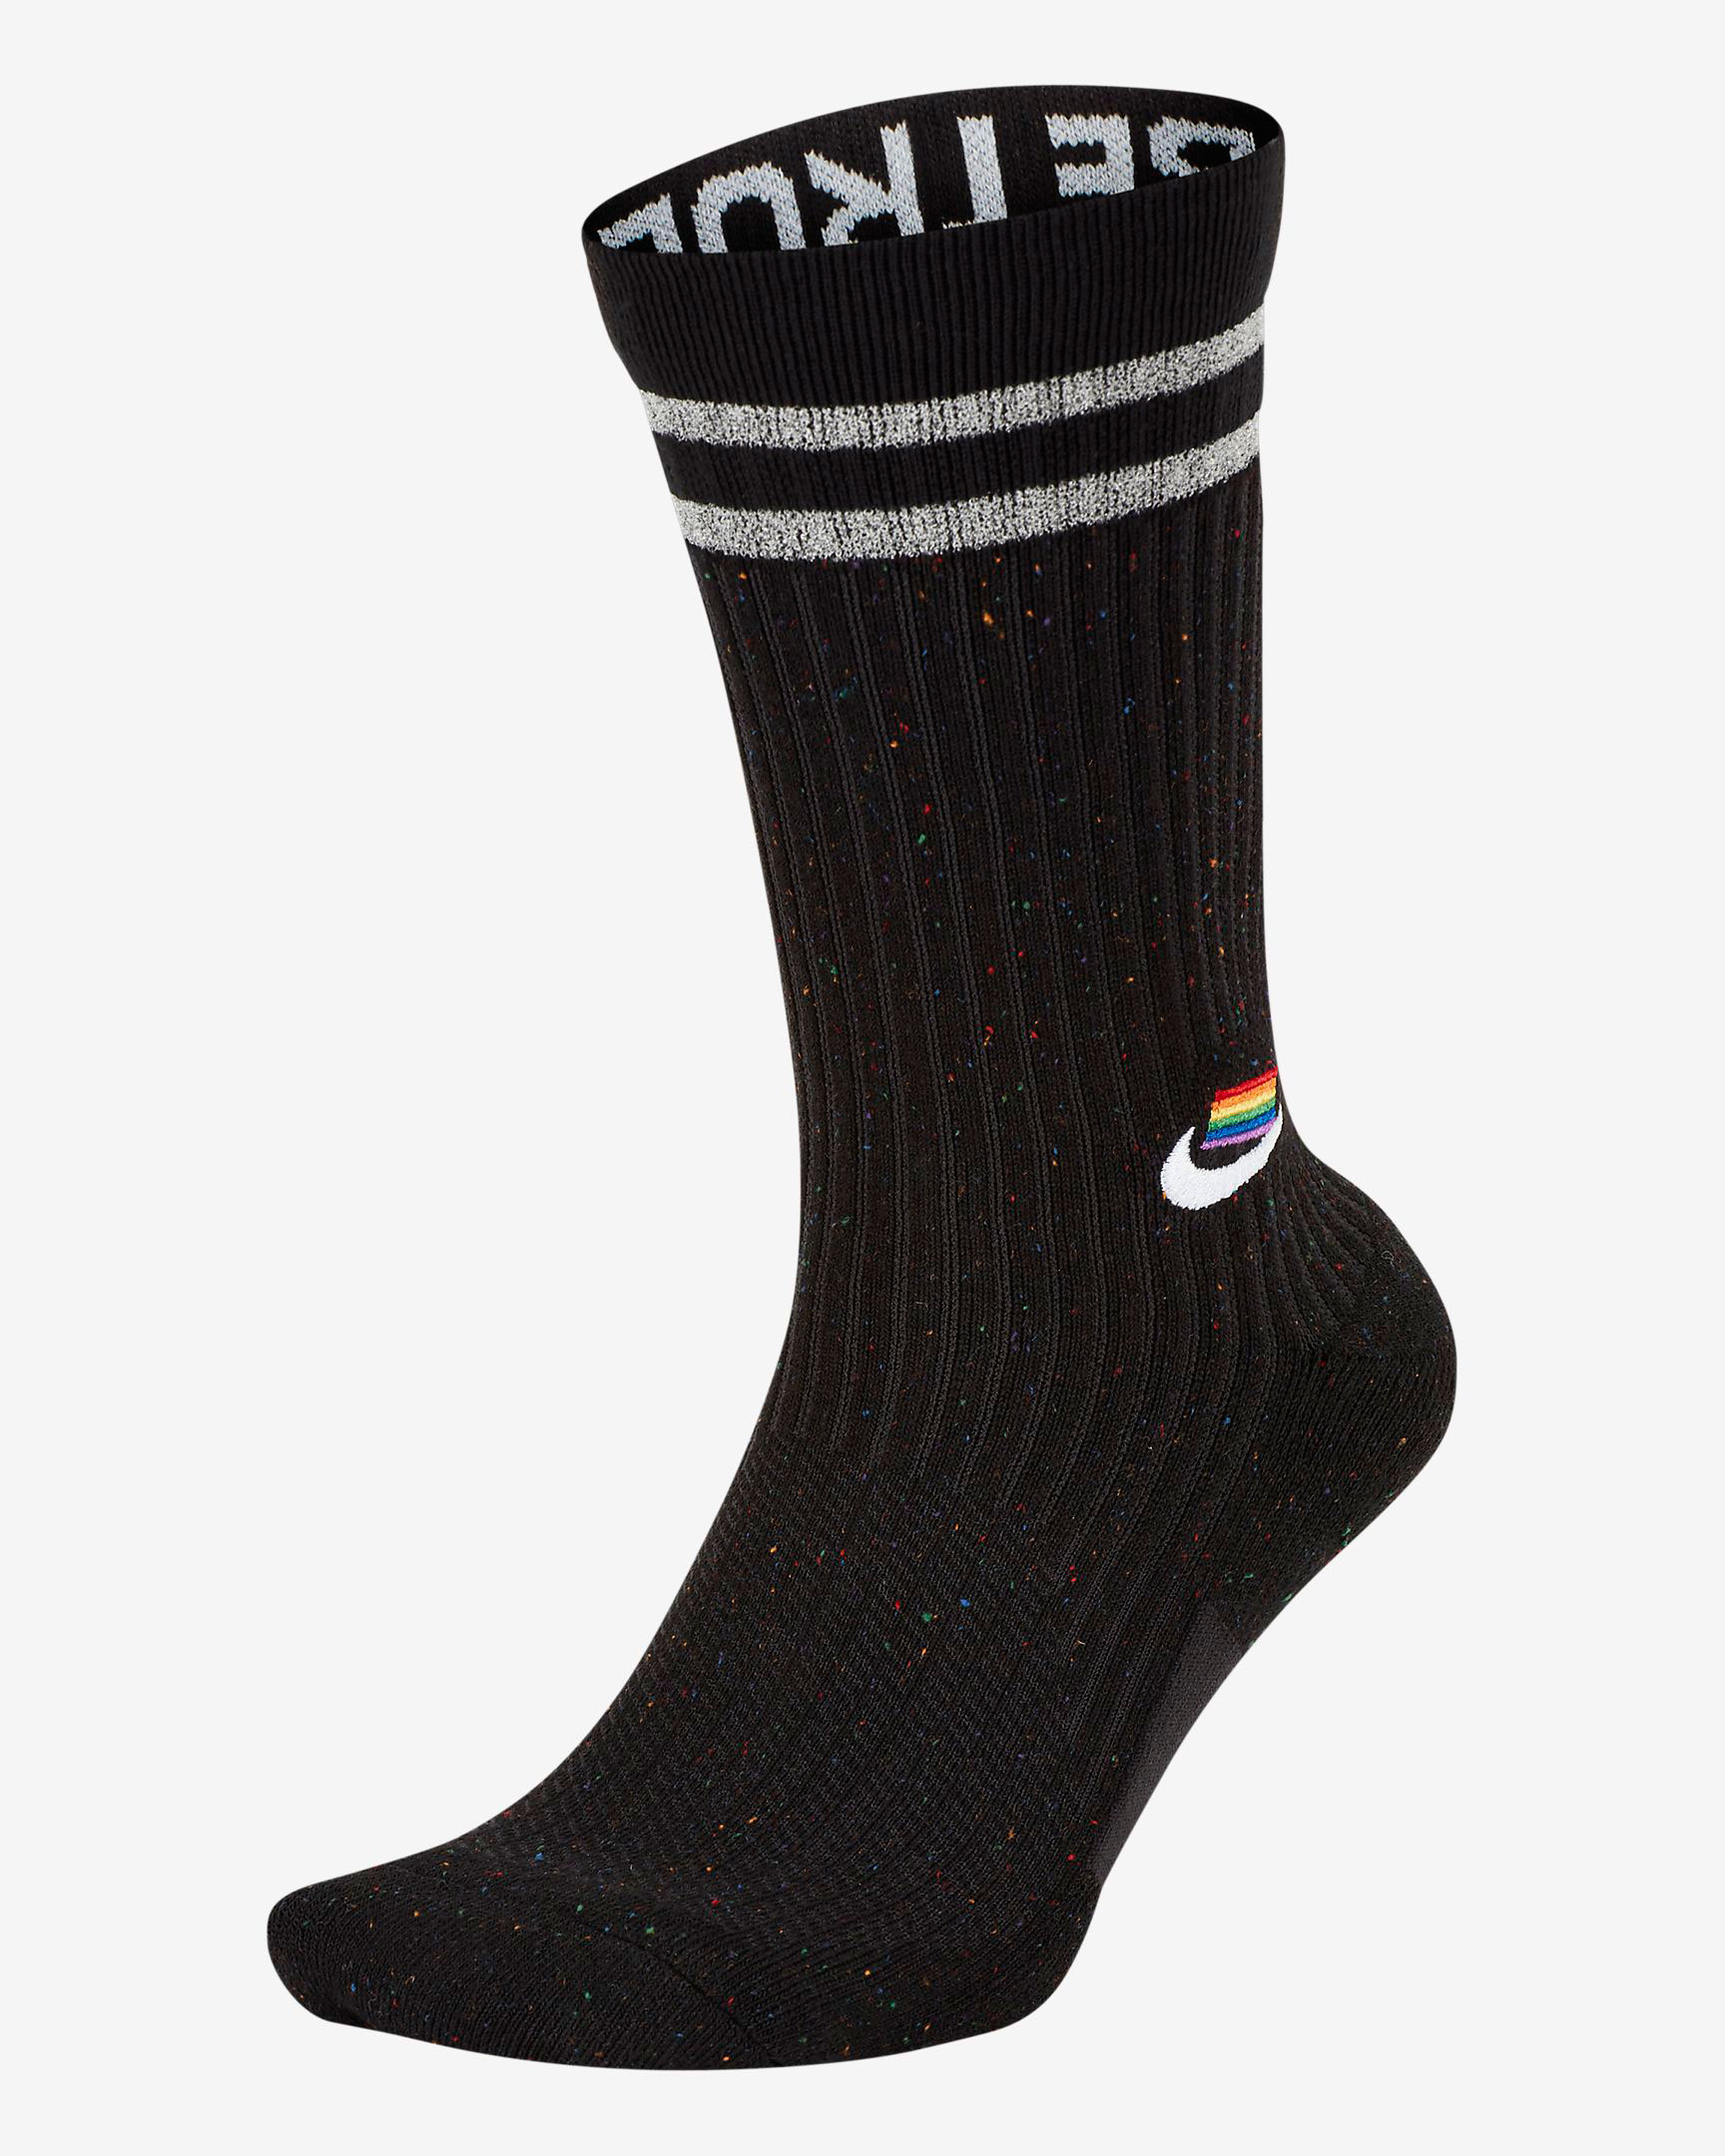 nike-betrue-2020-socks